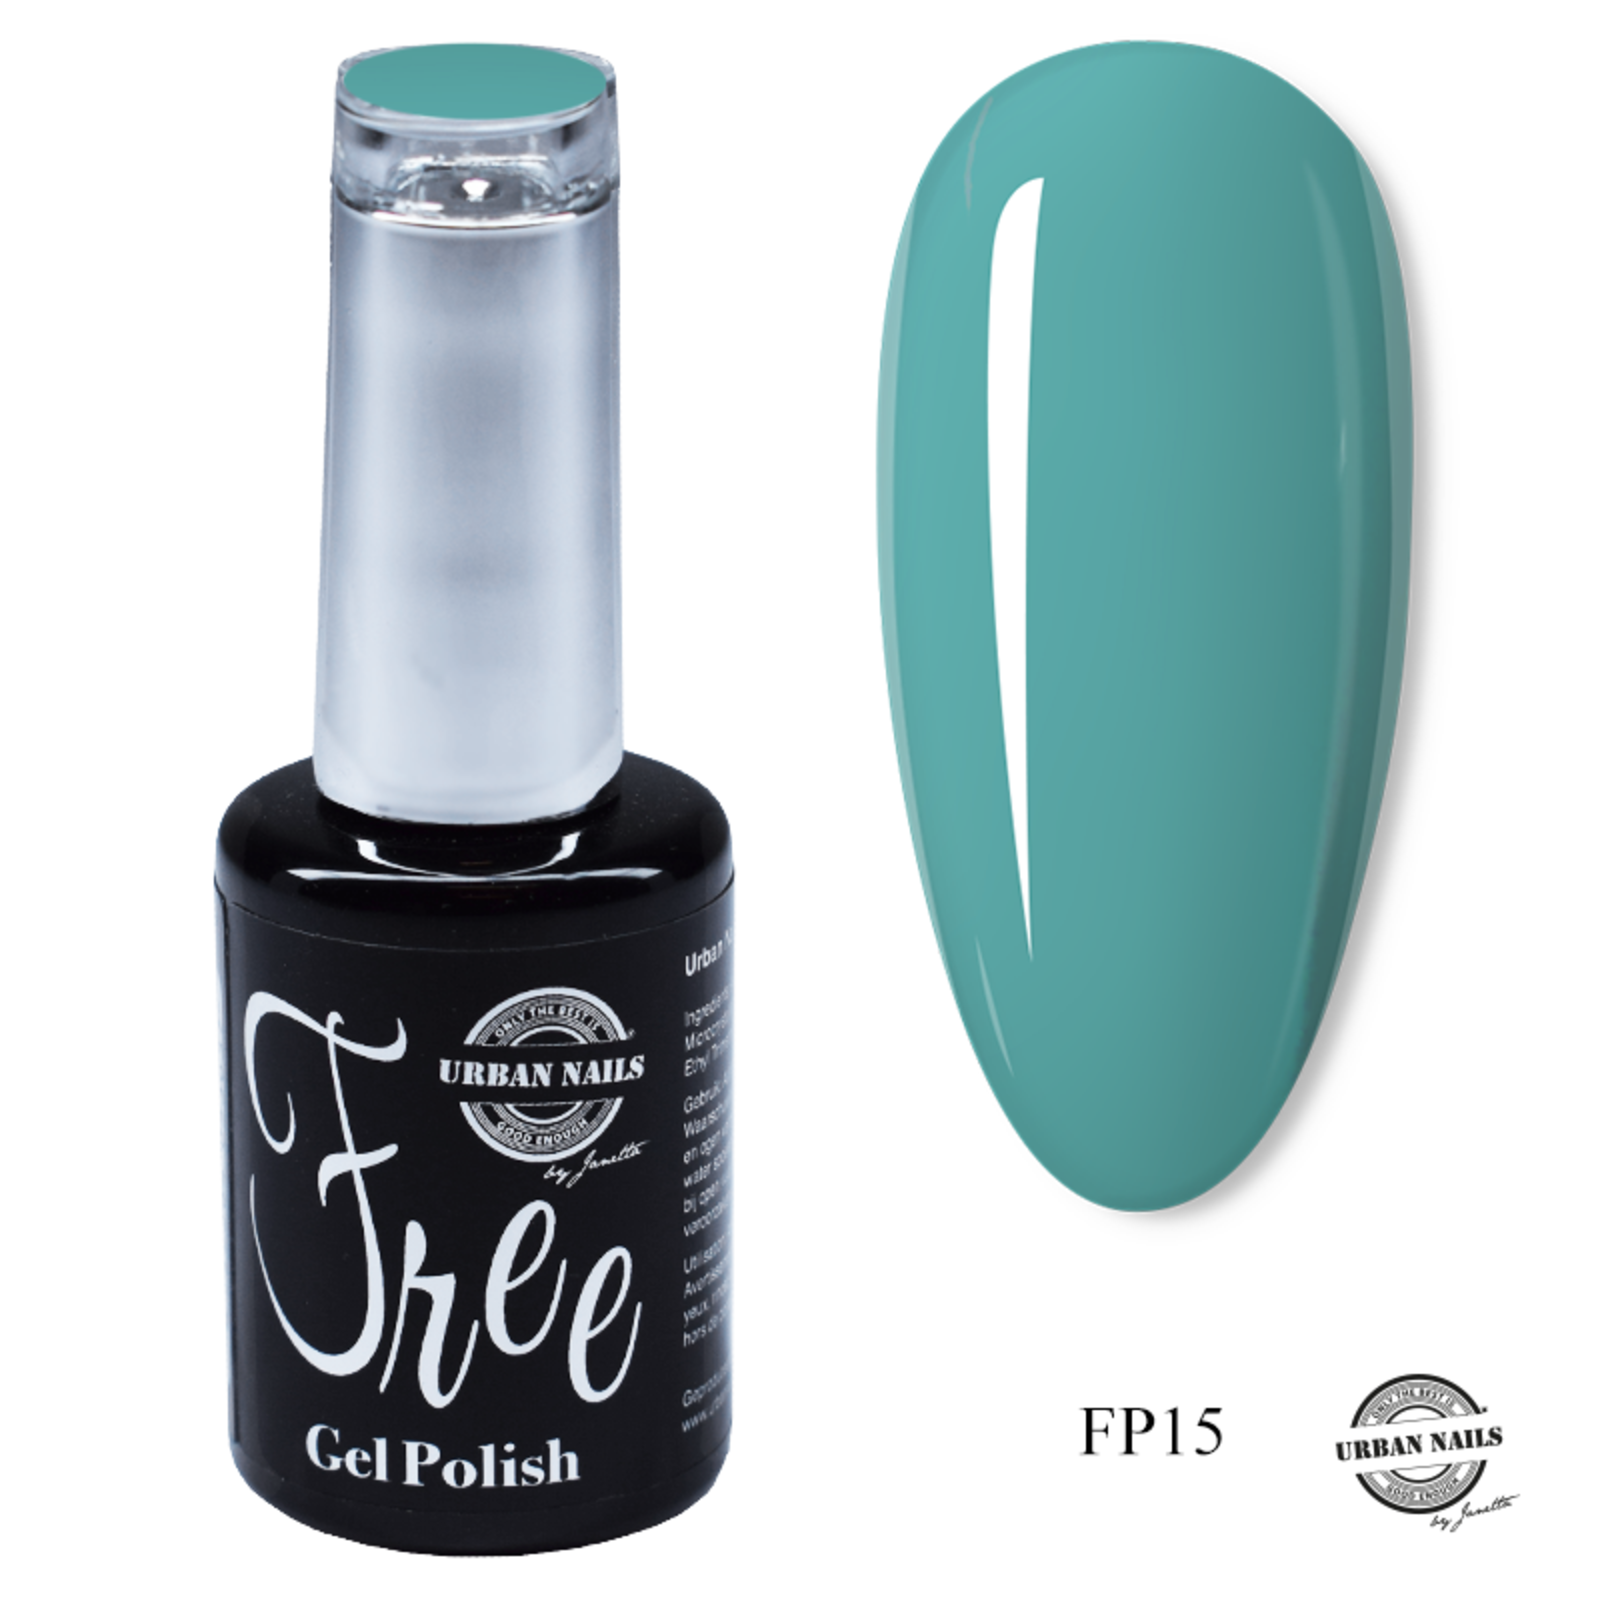 Urban nails Free Gelpolish FP15